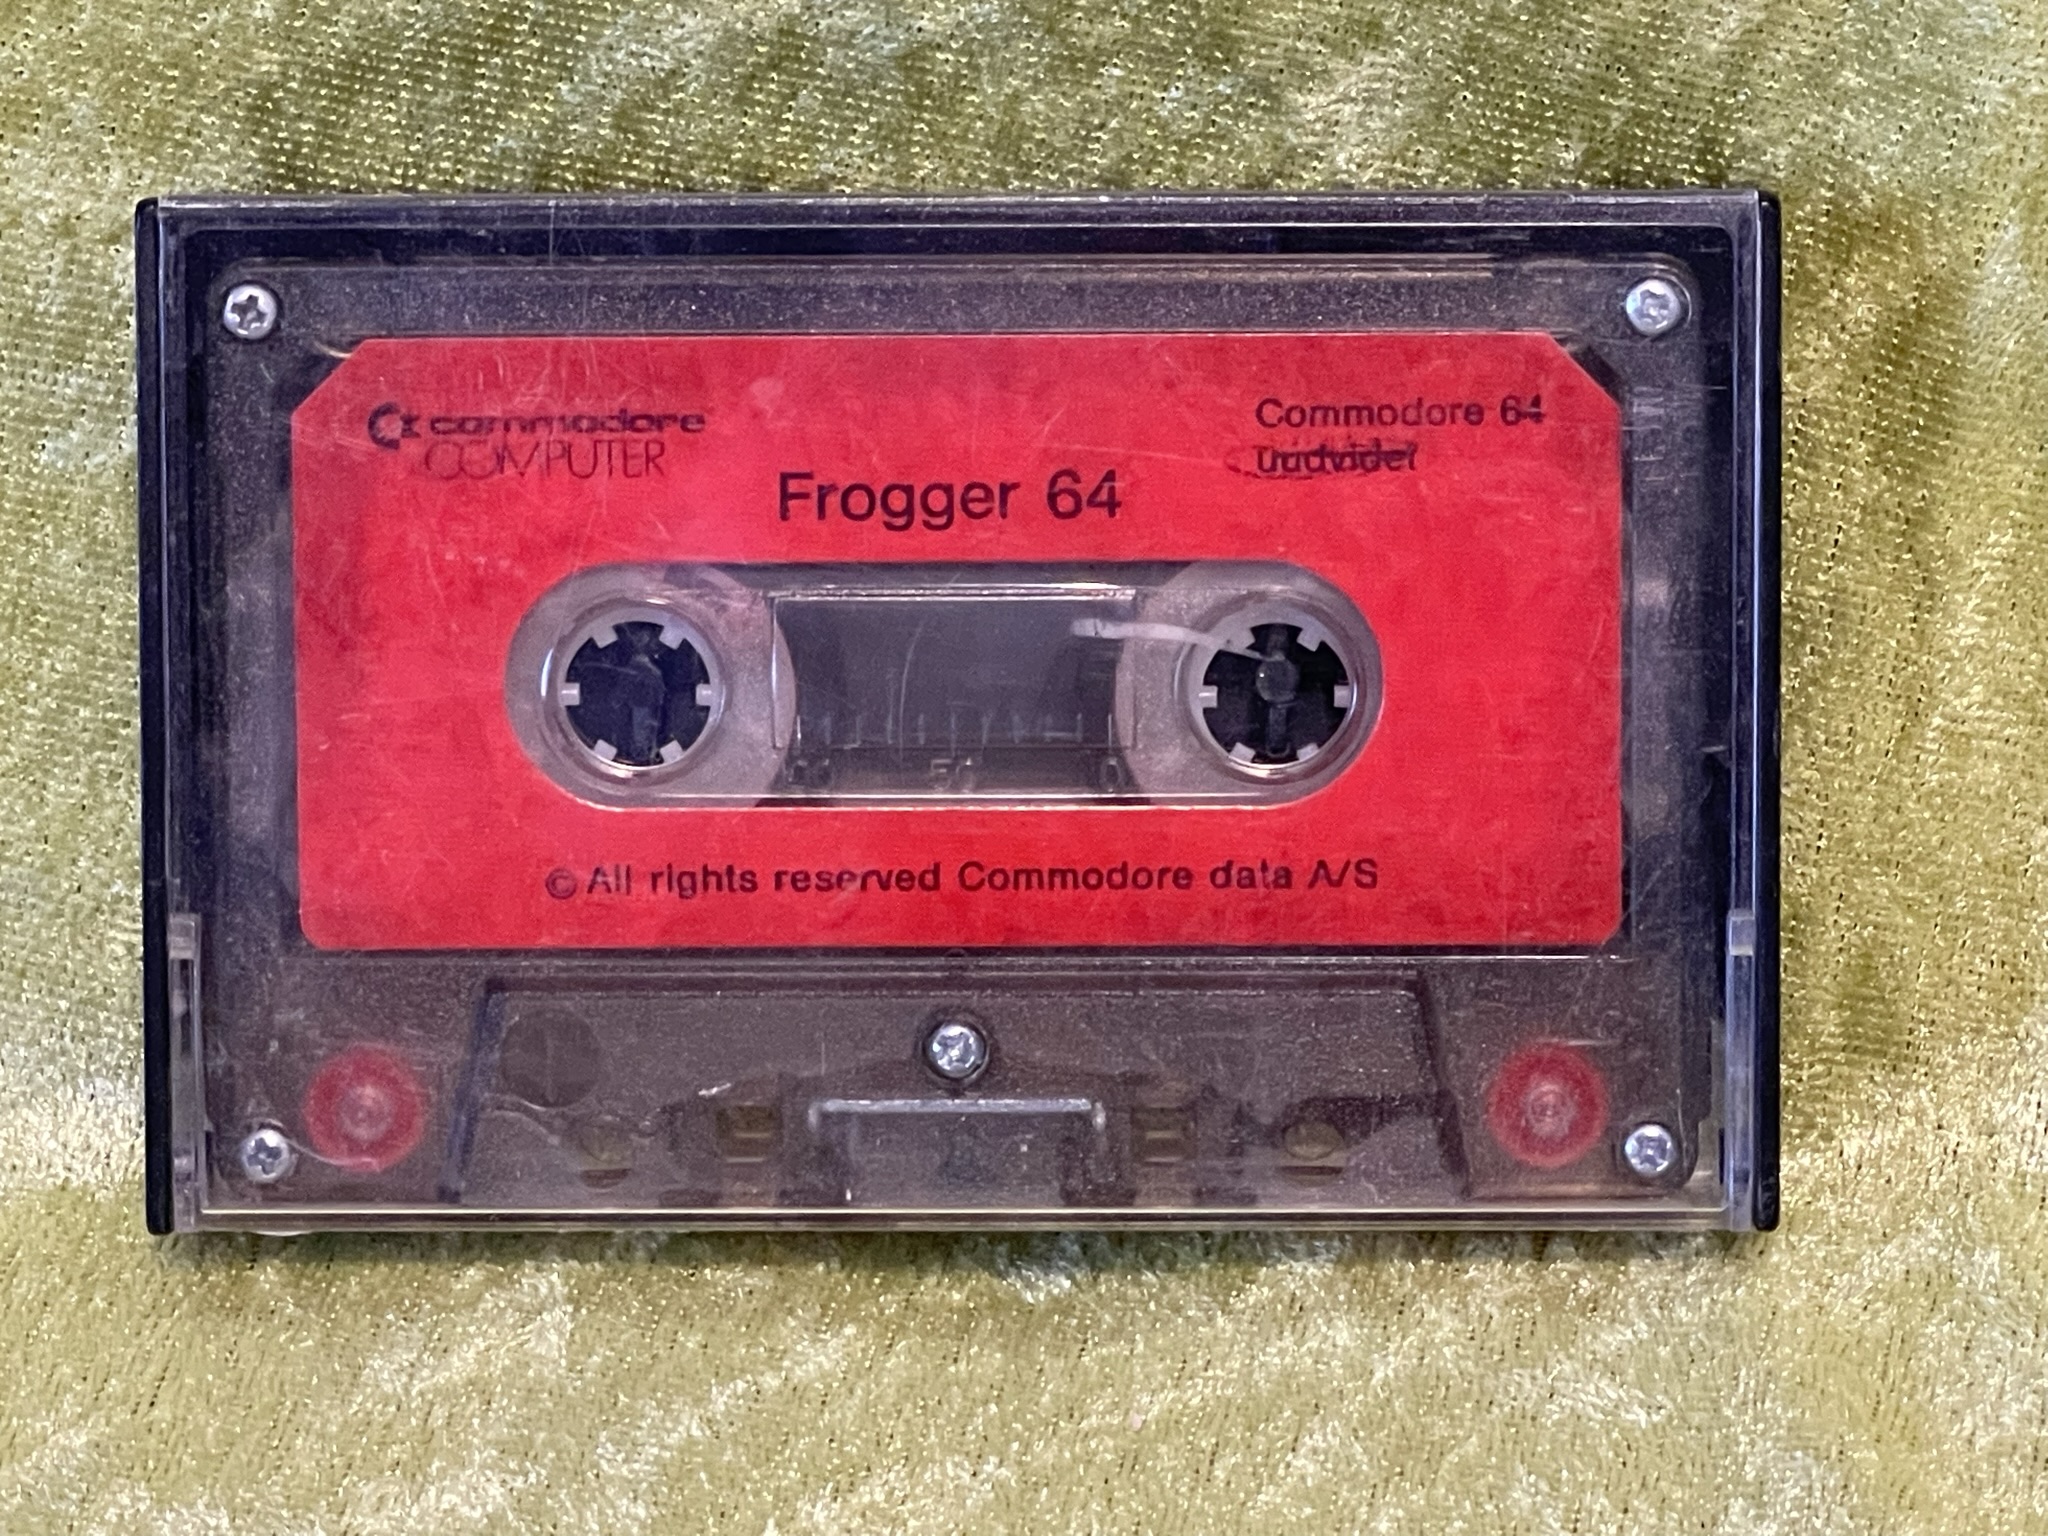 Frogger 64